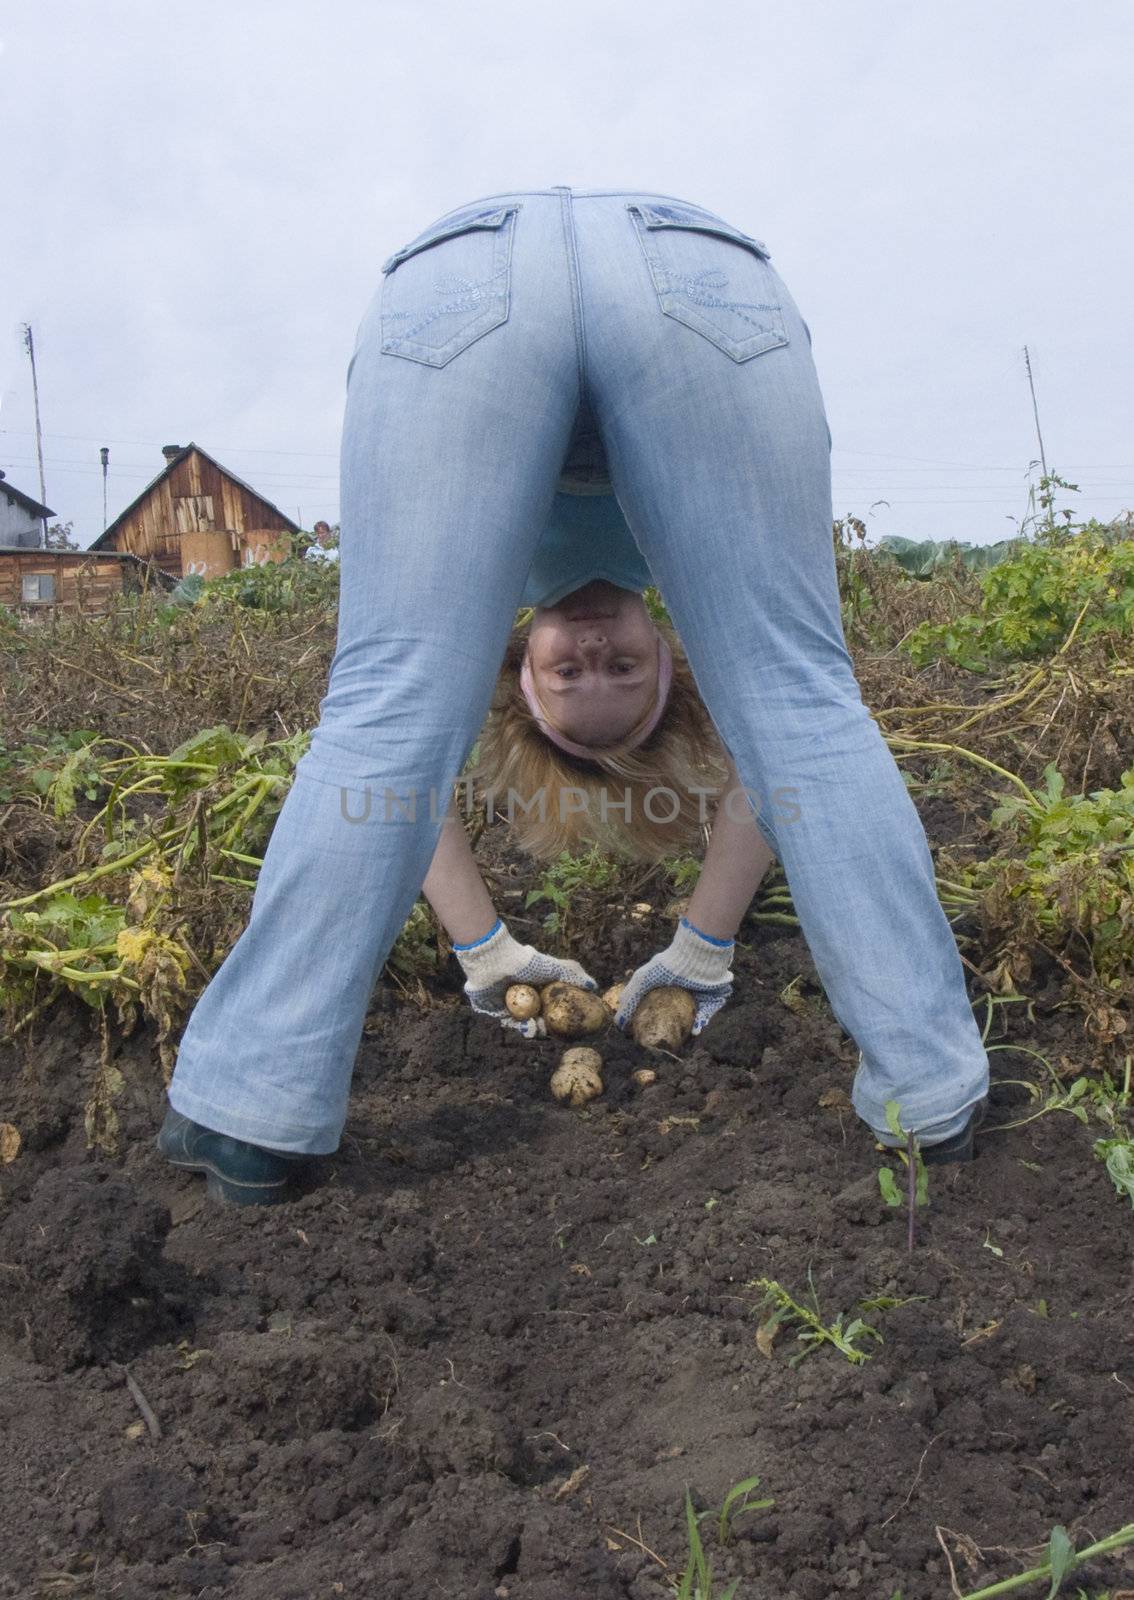 Potato harvesting by soloir